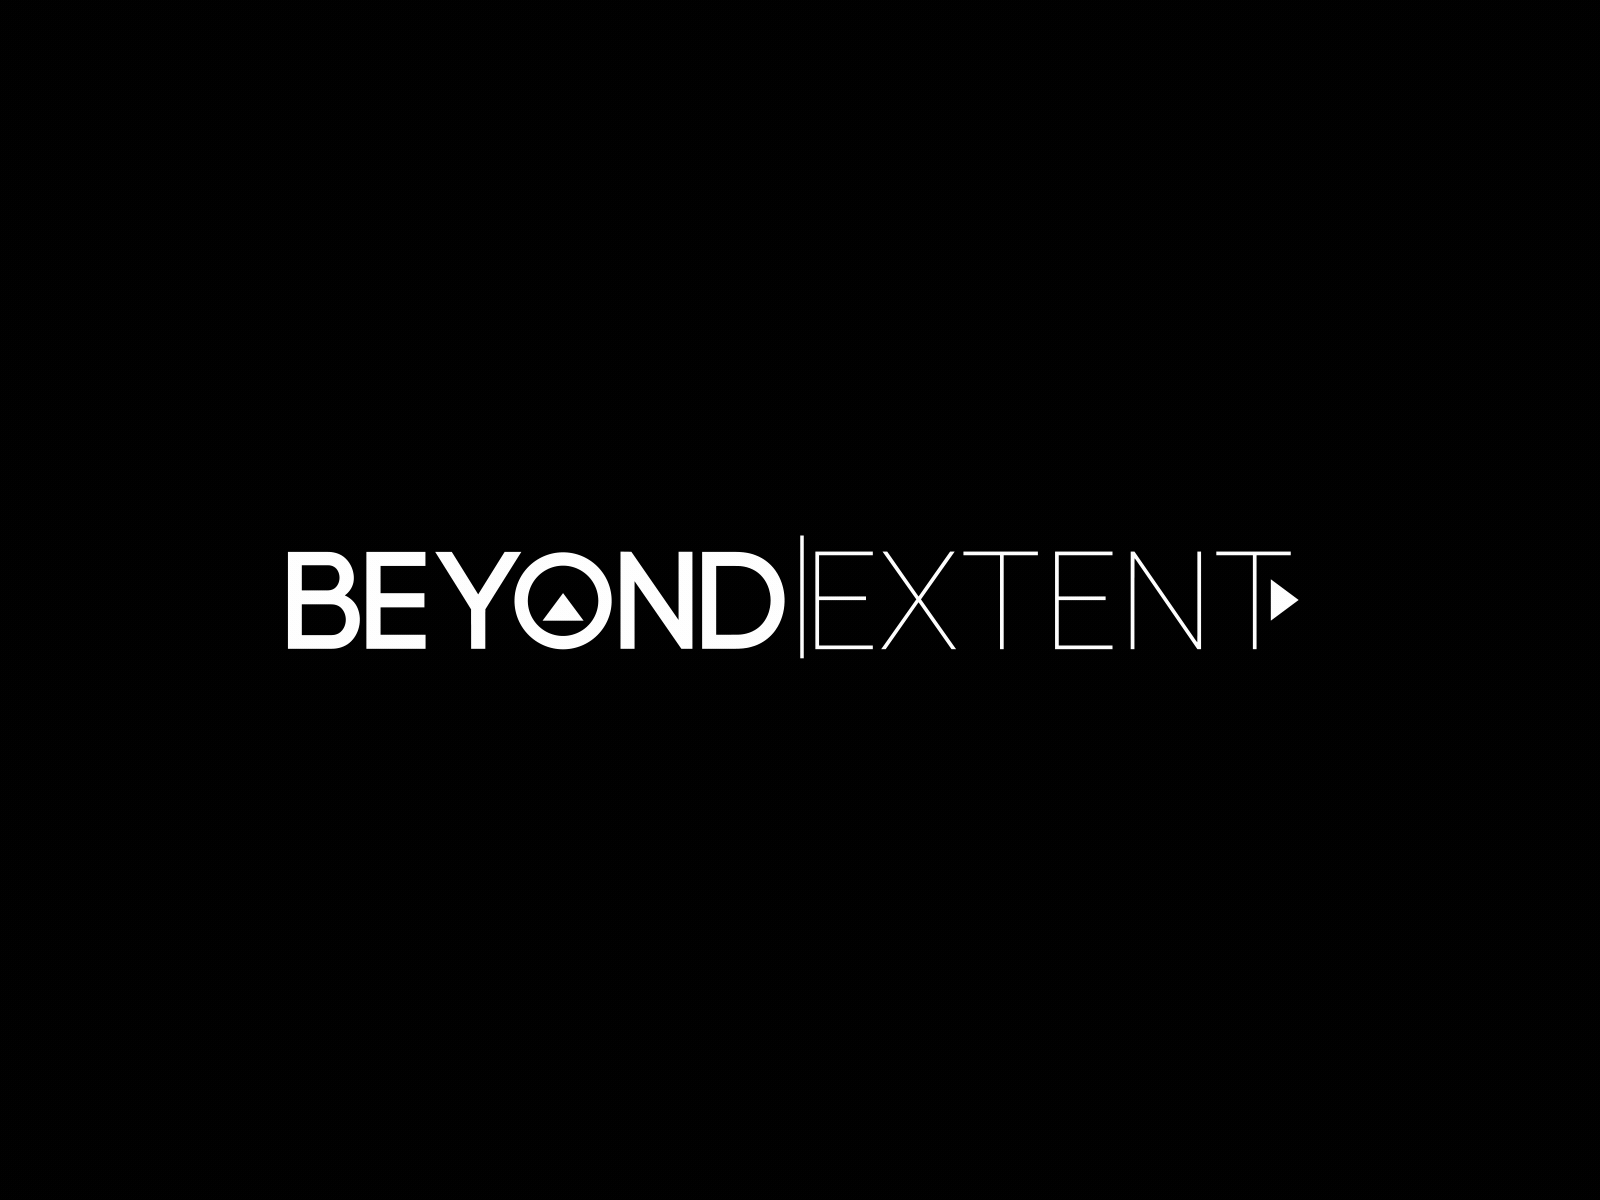 Beyond Extent Logo Animation